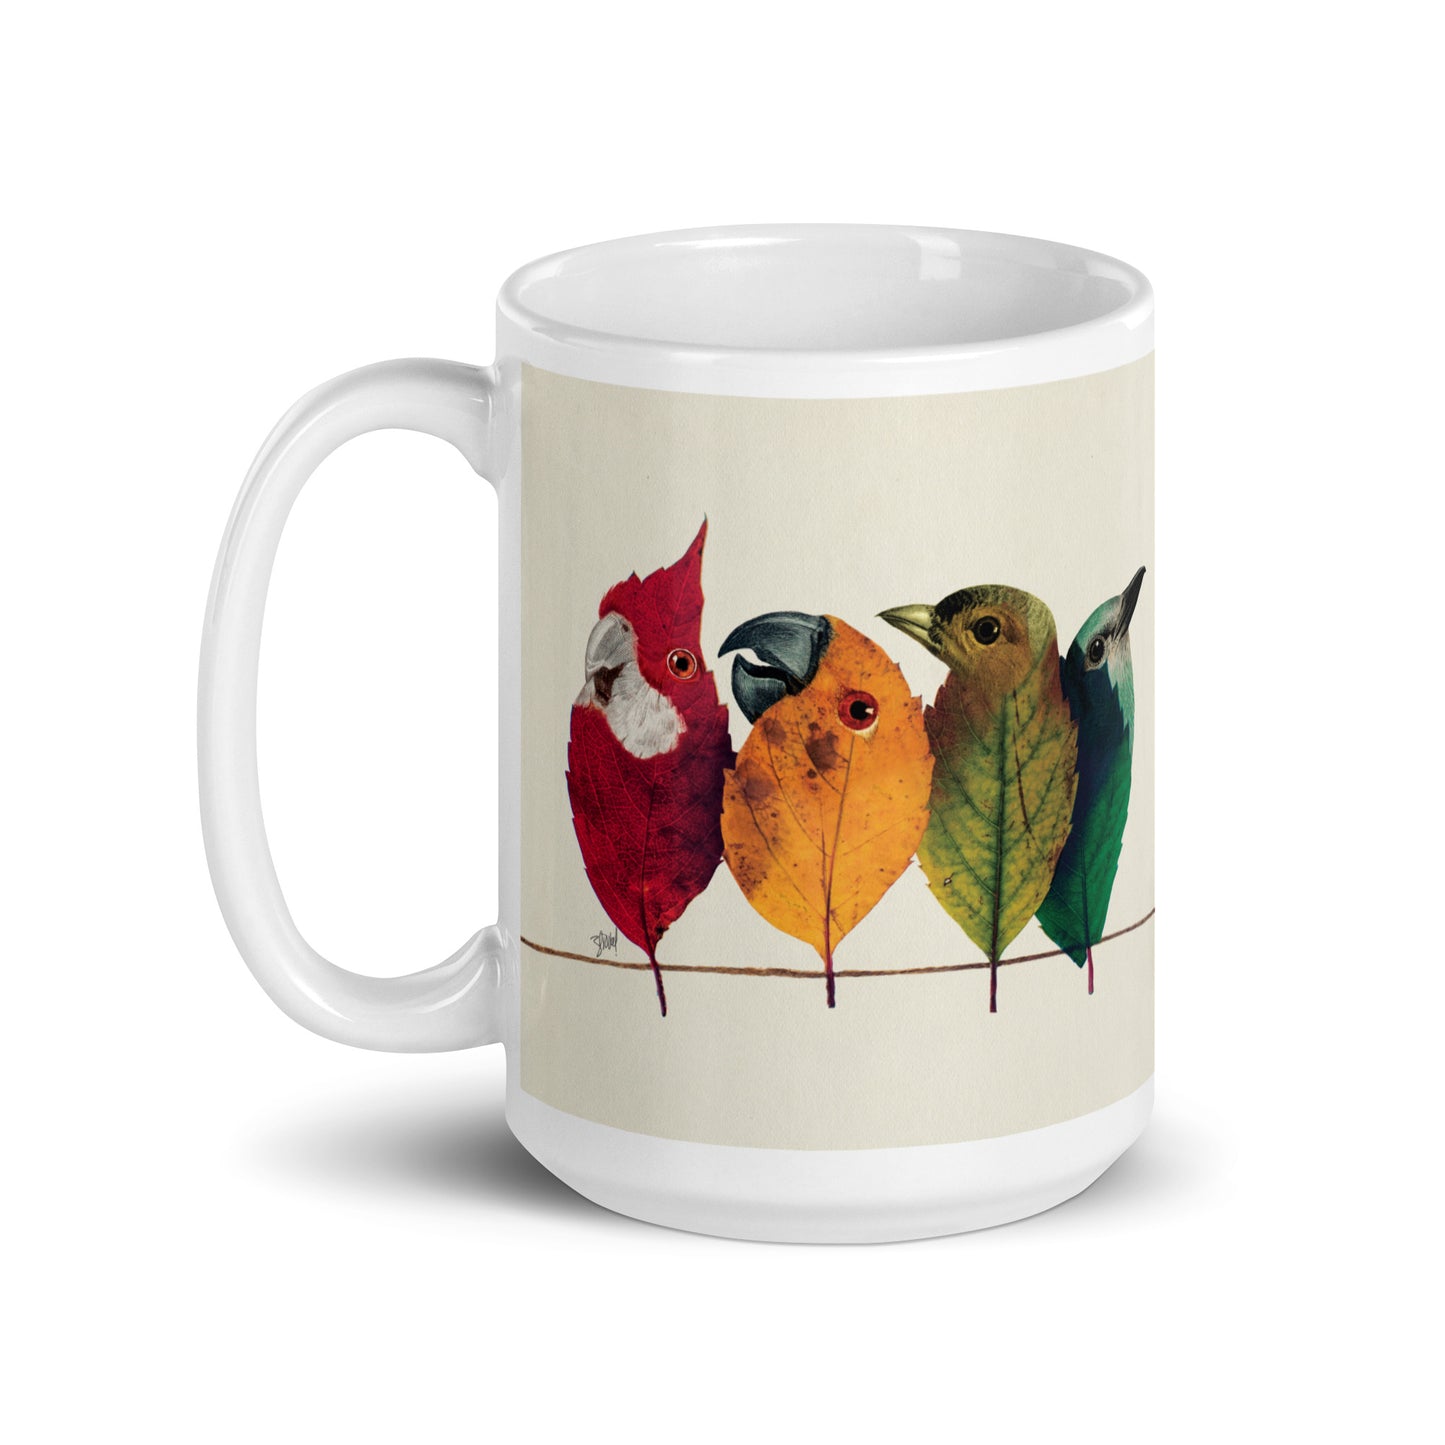 Birds on the wire mug